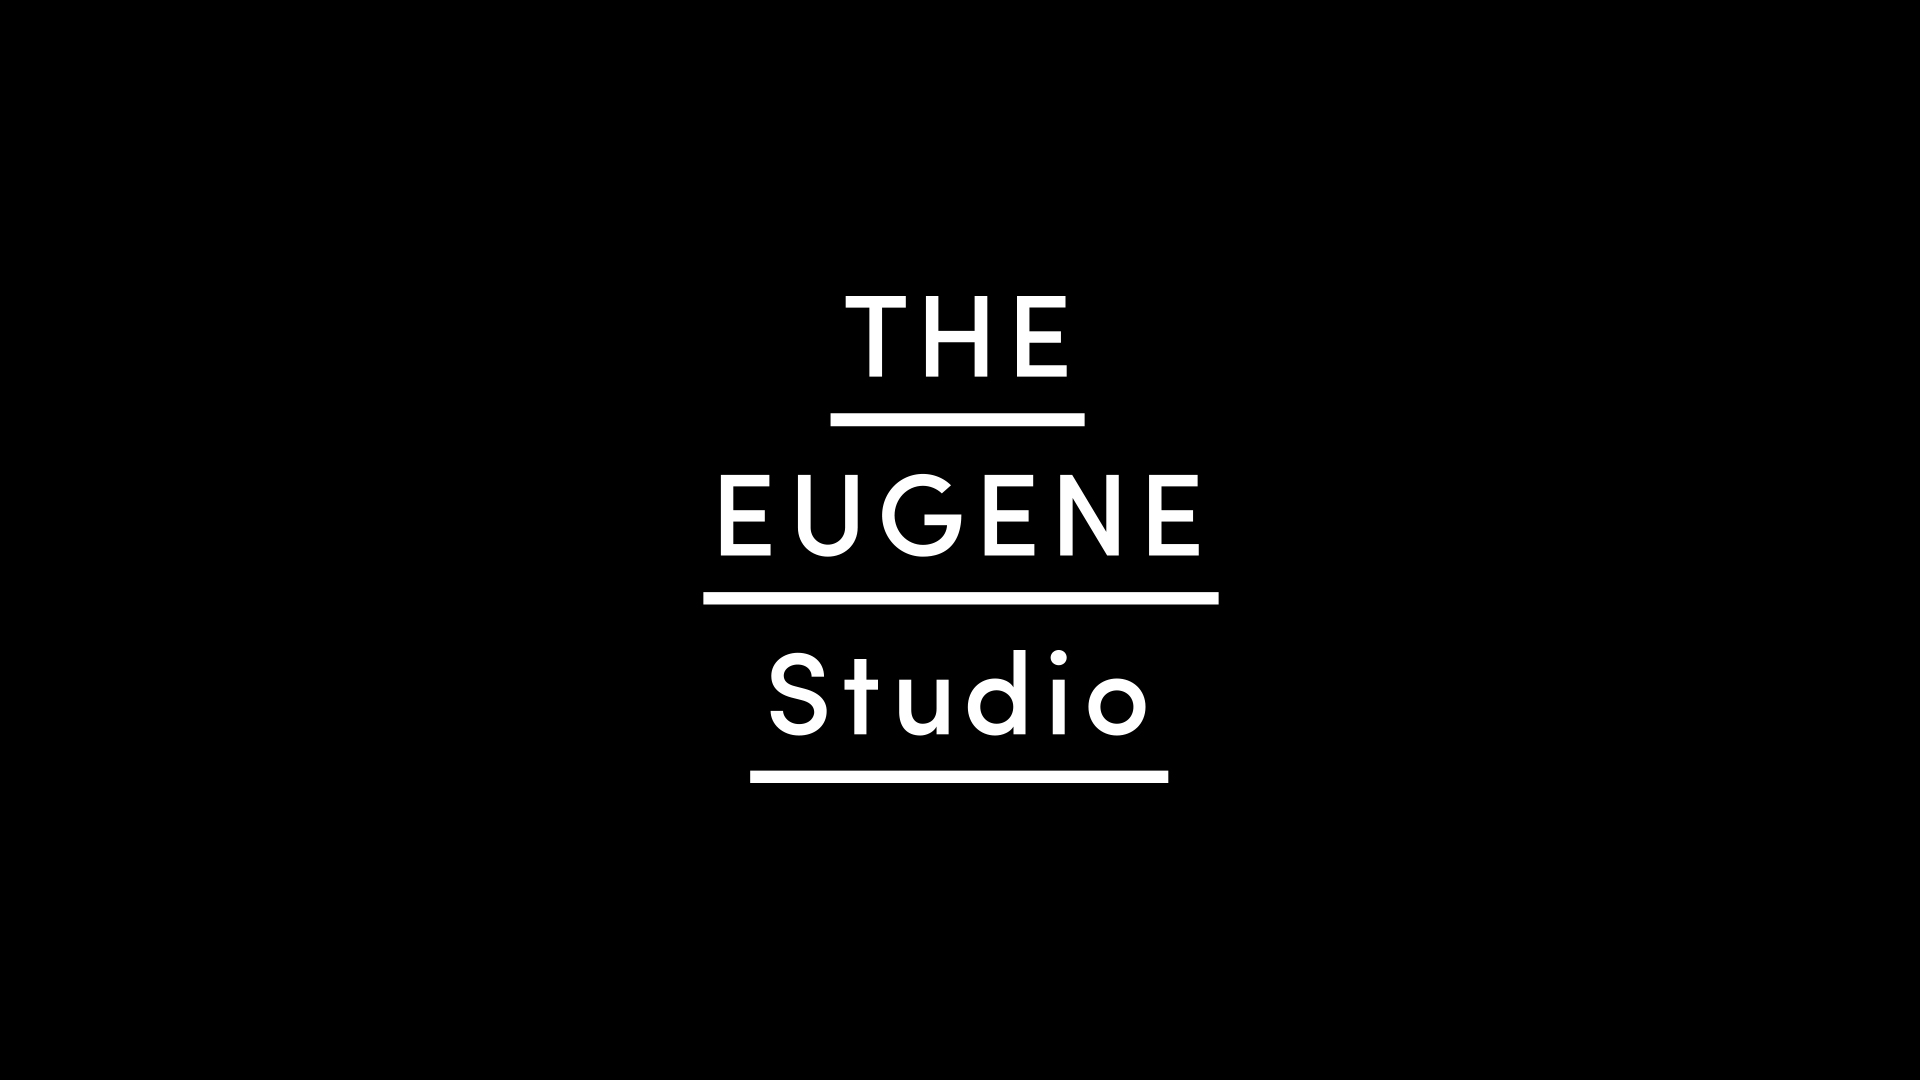 THE EUGENE Studio